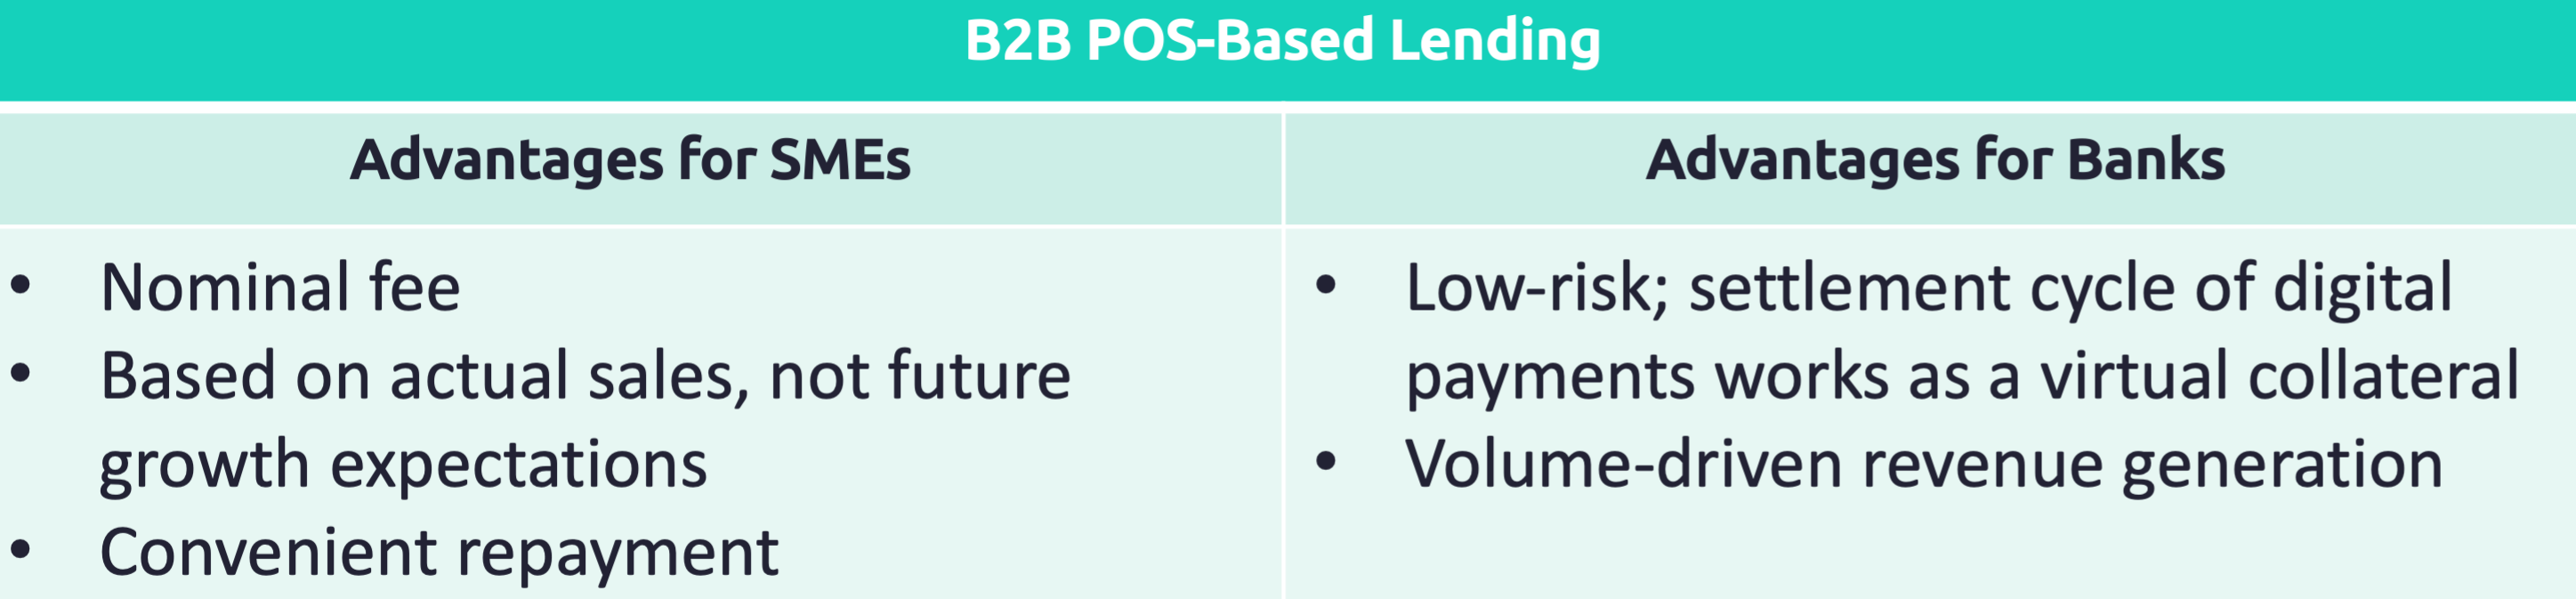 B2B POS-based Lending: Advantages